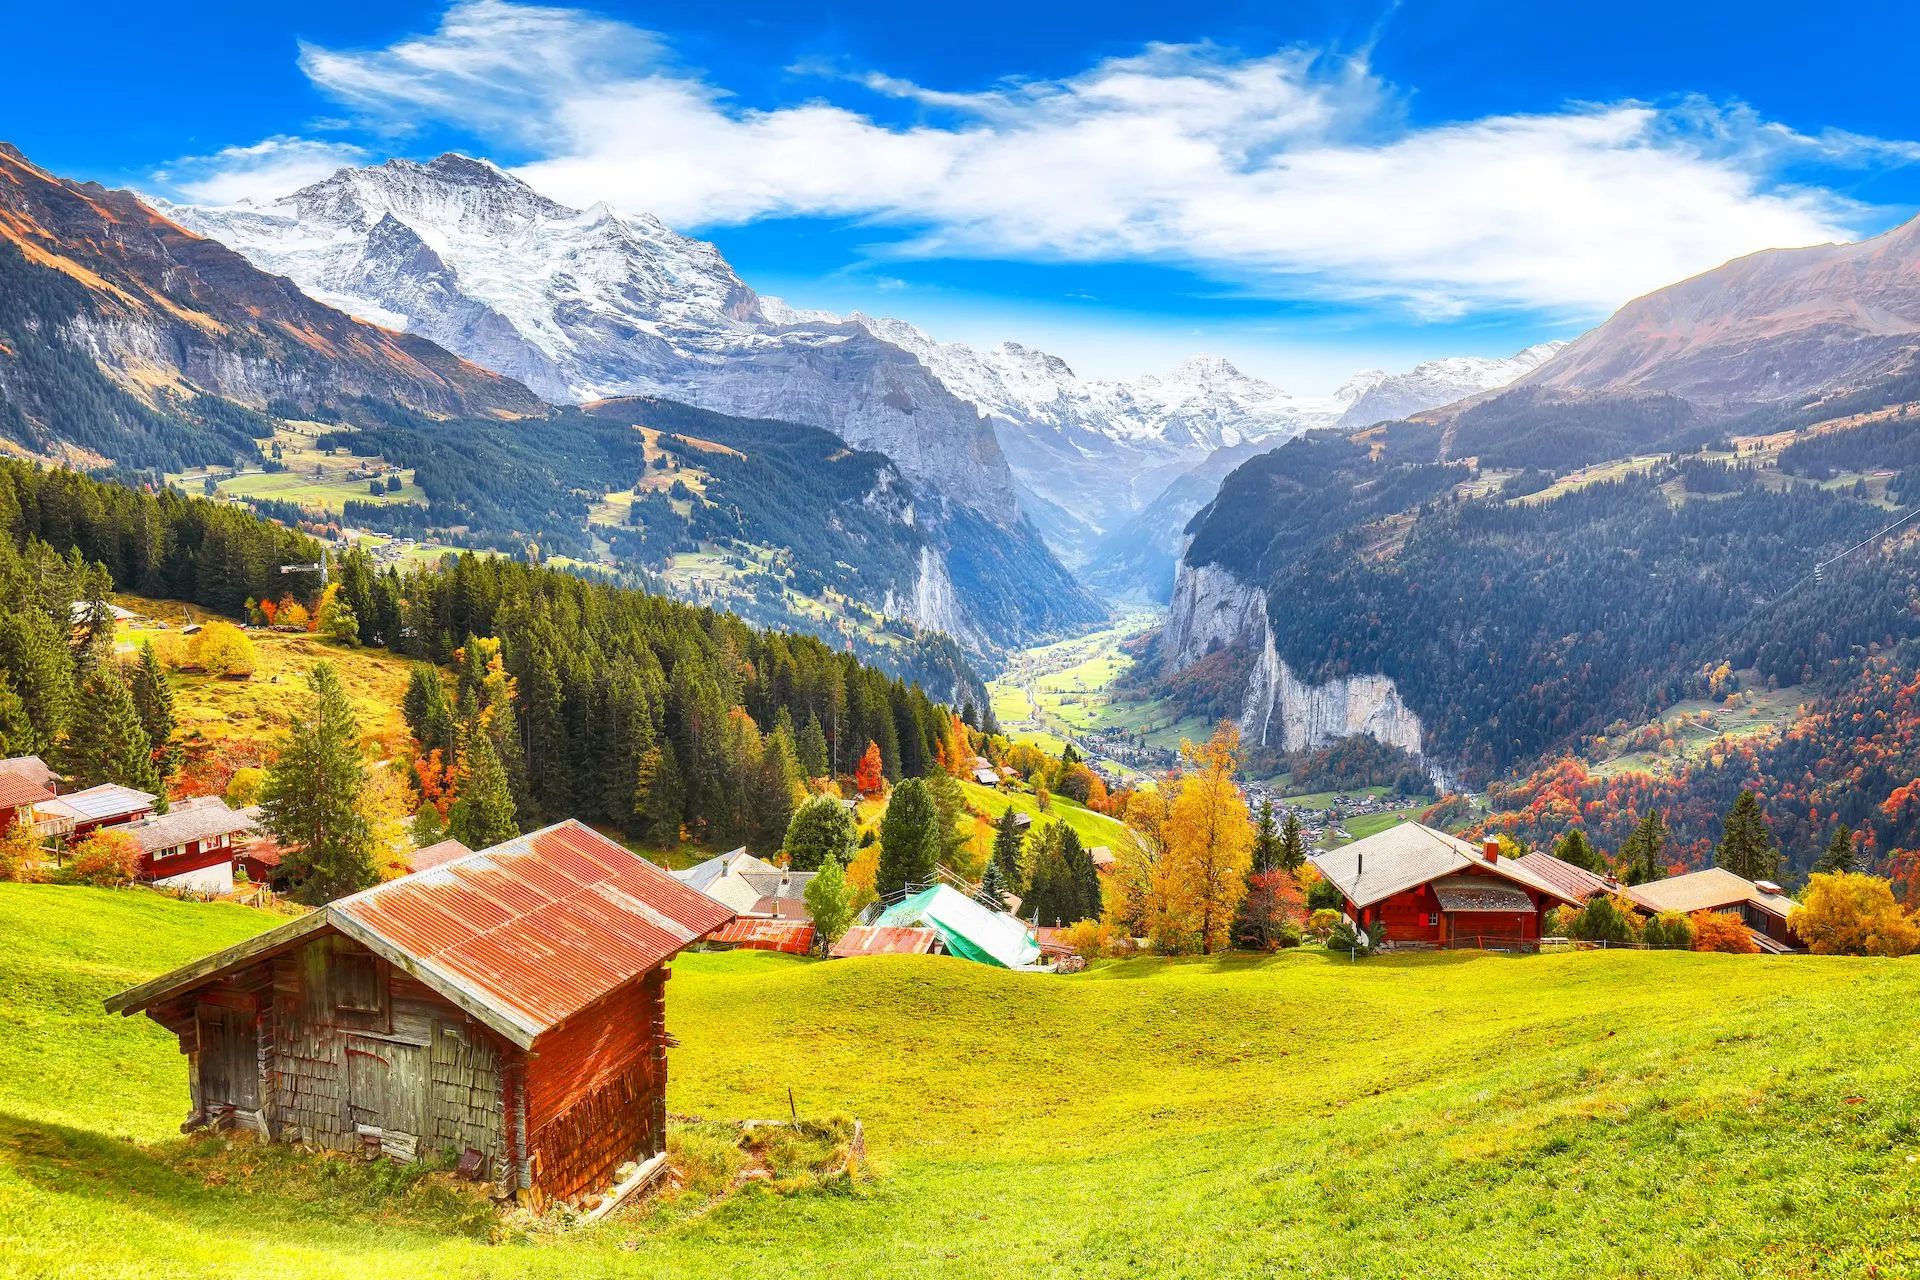 Fabulous autumn view of picturesque alpine wengen village and lauterbrunnen valley